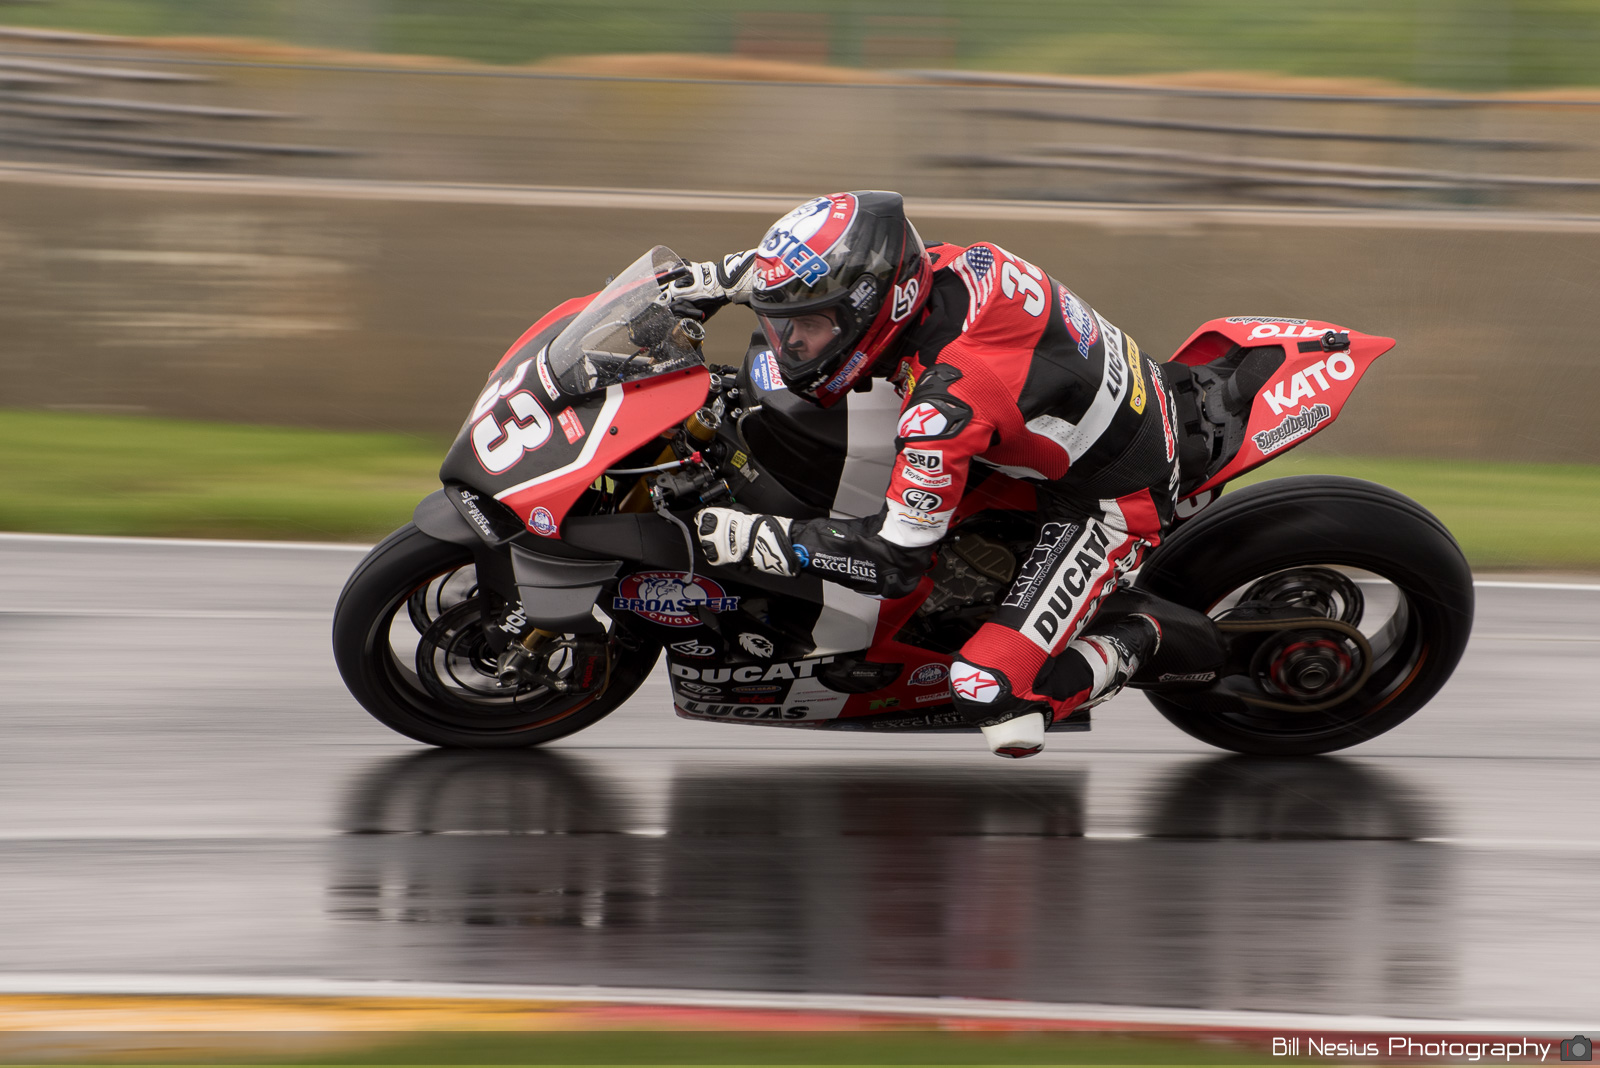 Kyle Wyman on the Number 33 Kyle Wyman Racing Ducati Panigale V4R / DSC_9225 / 4